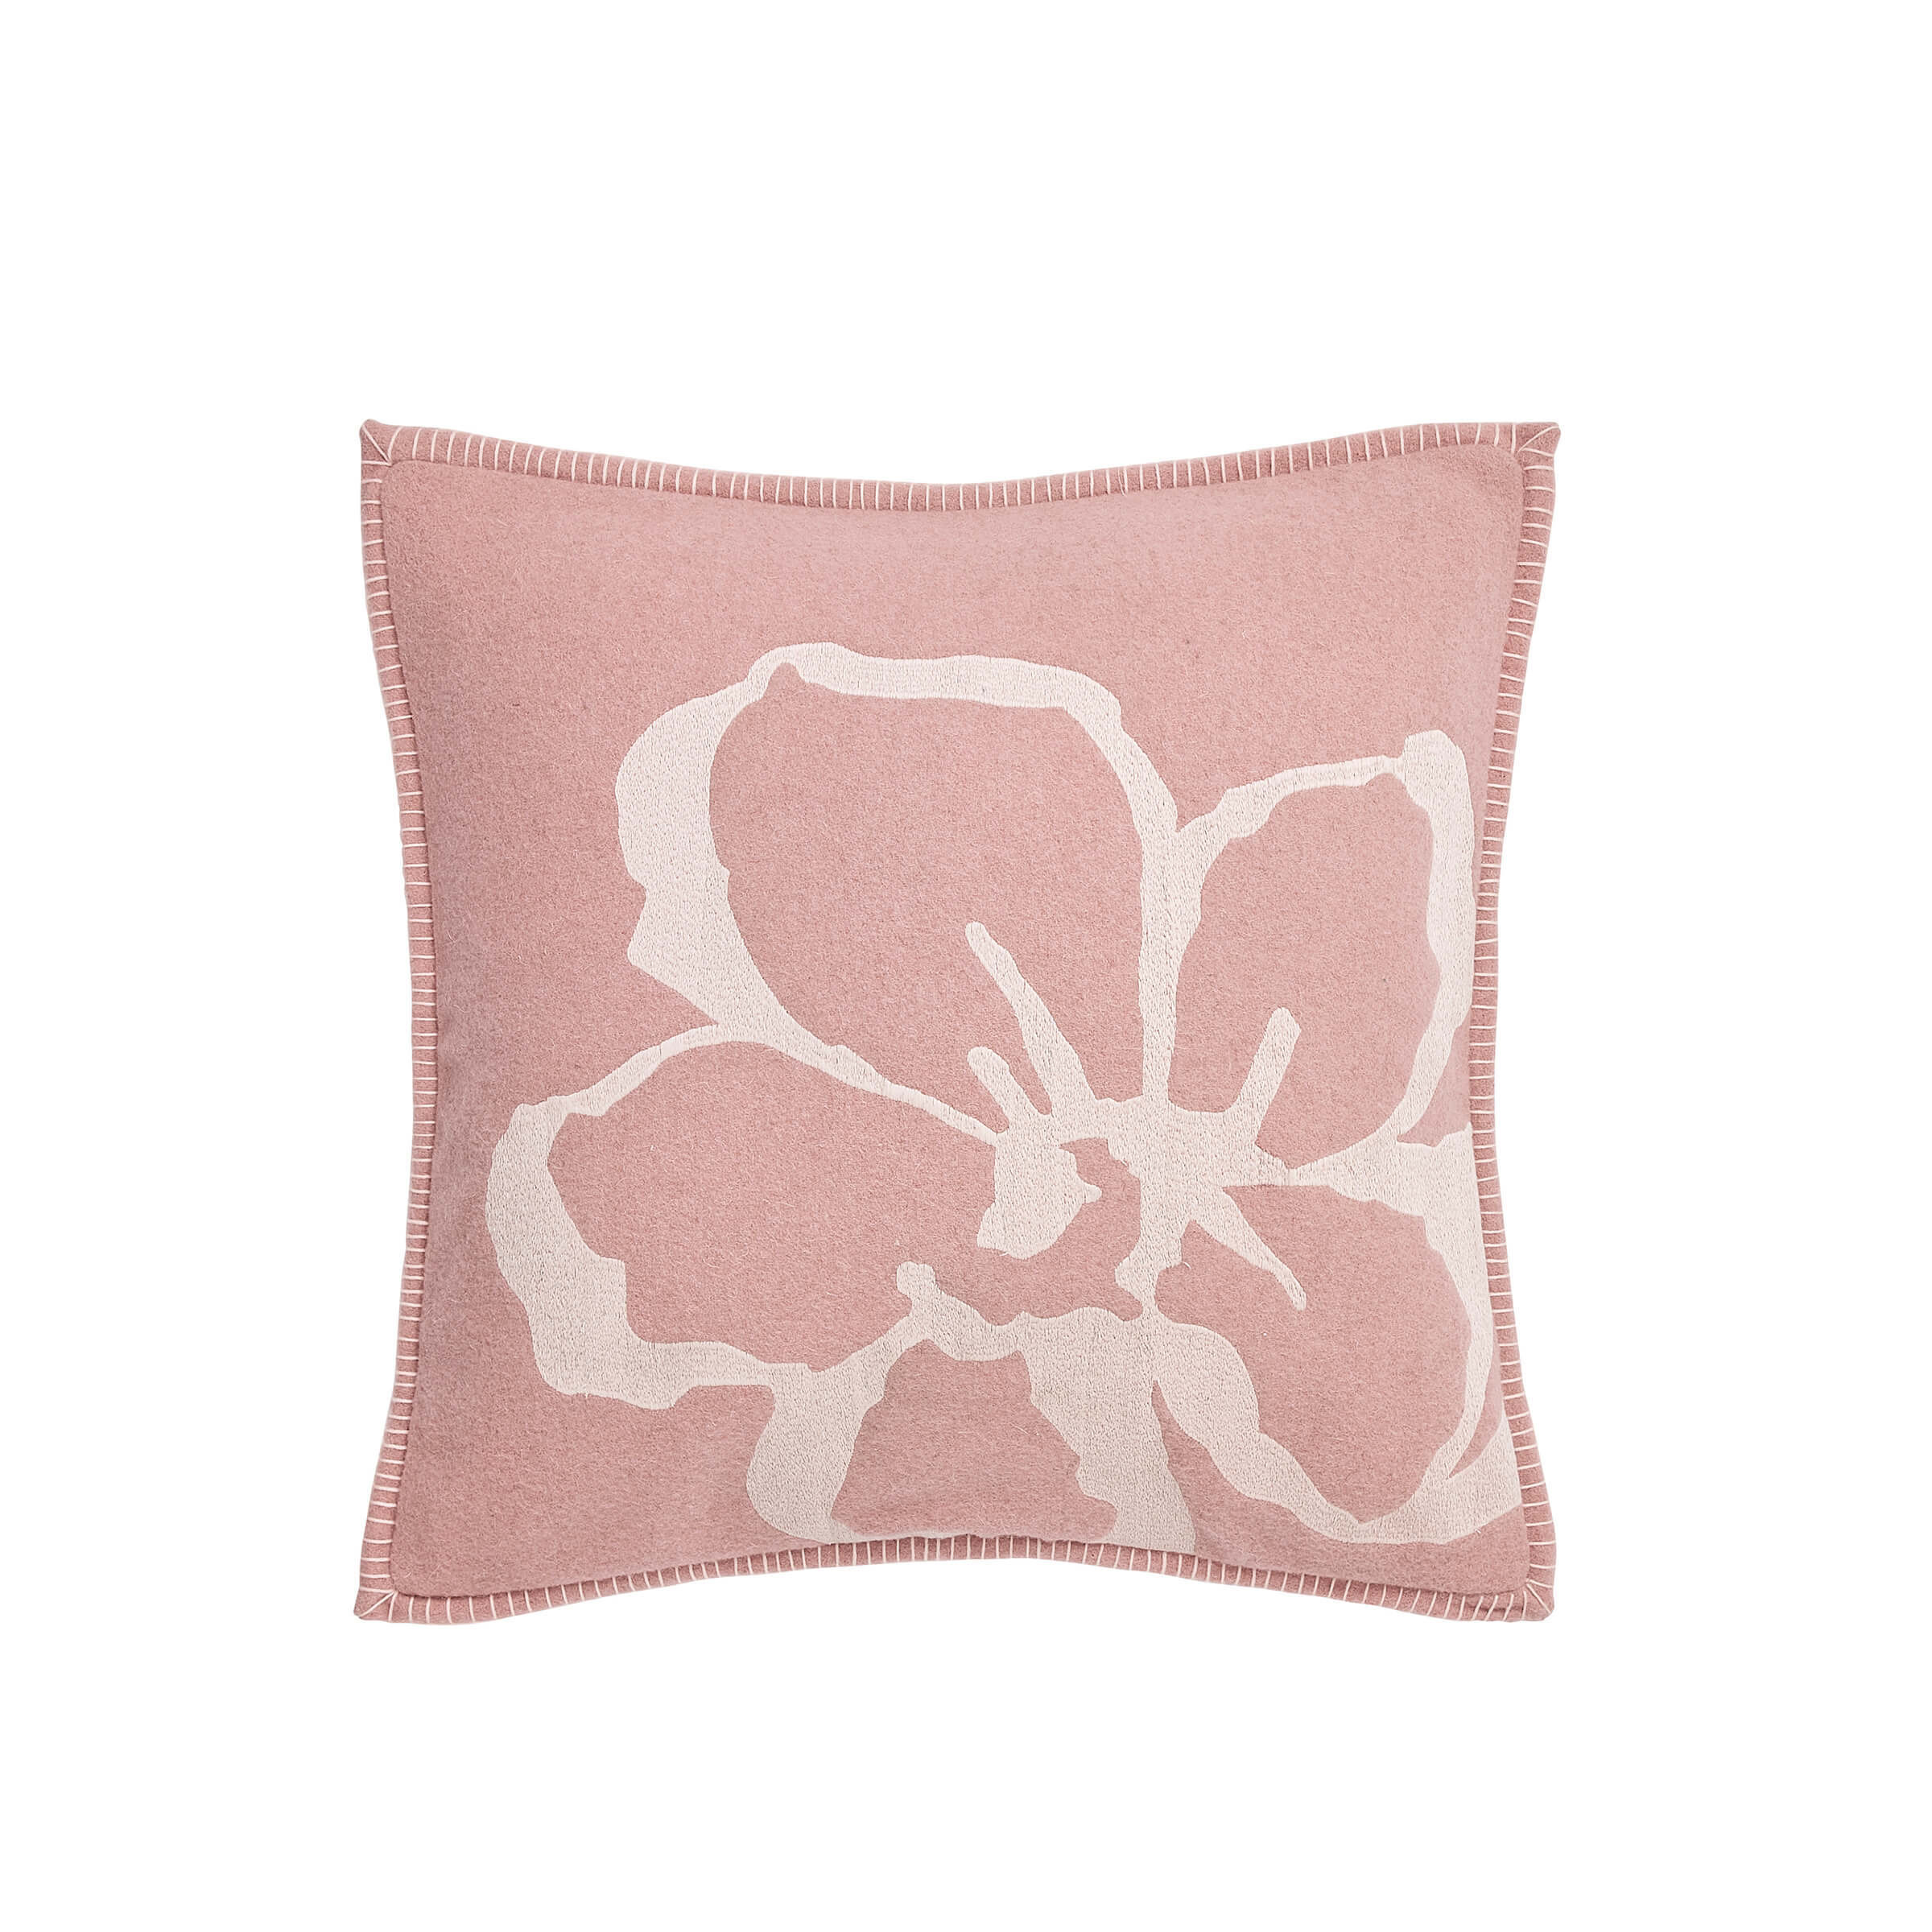 Ted Baker Magnolia Cushion 50cm x 50cm, Soft Pink - image 1